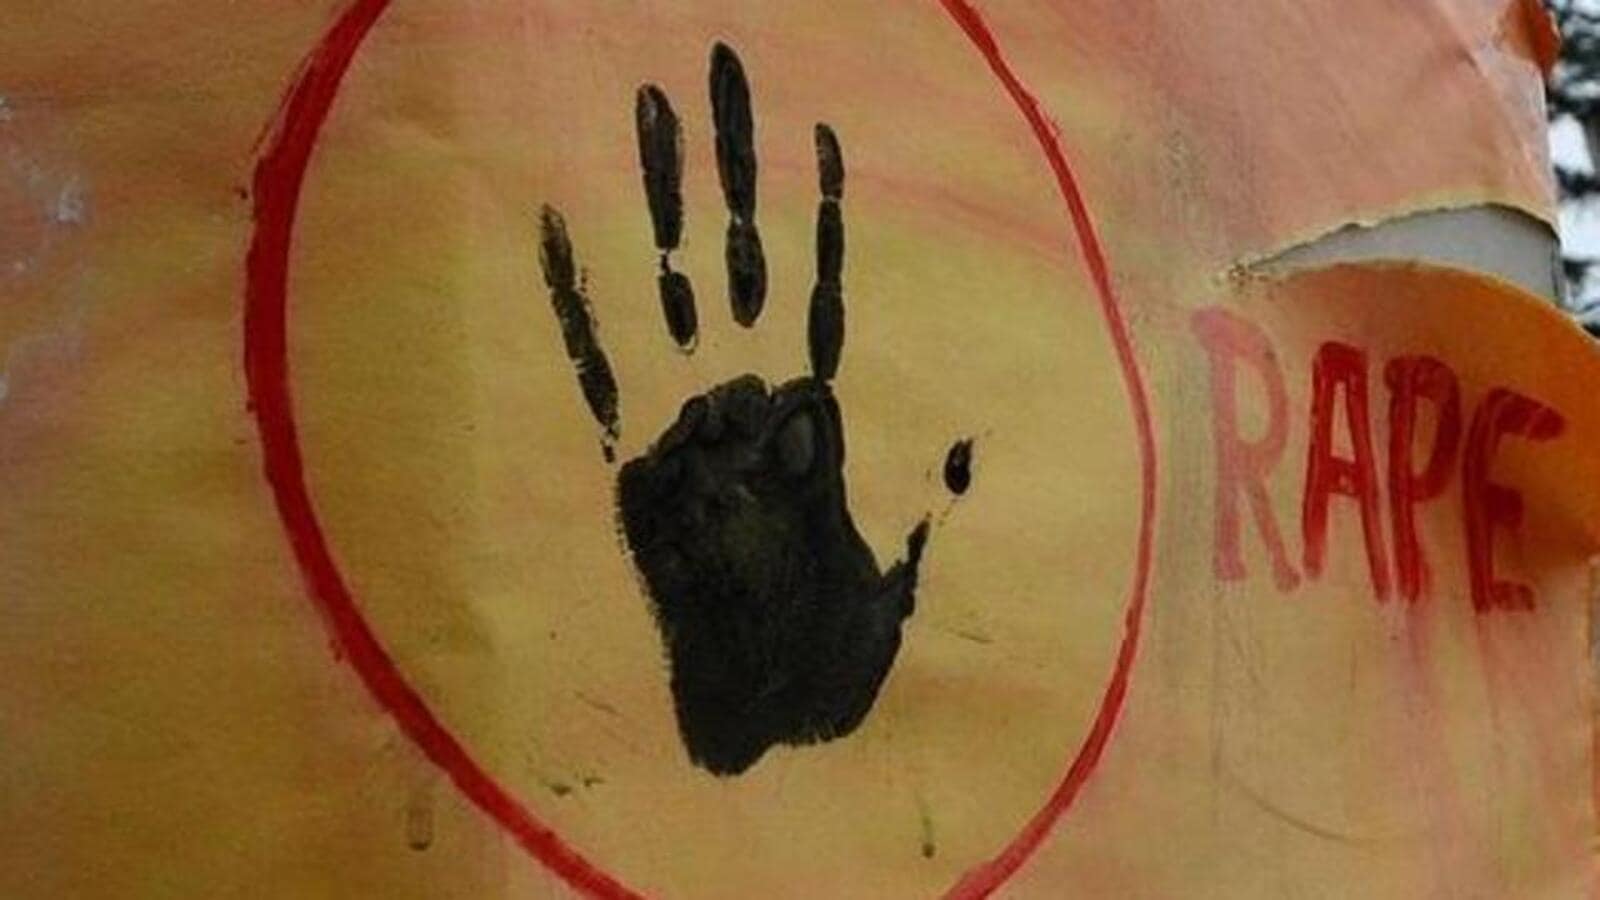 Xxx Desi Gang Rape Wala - 2 minor girls allegedly gang-raped by 5 teenagers in Bihar - Hindustan Times